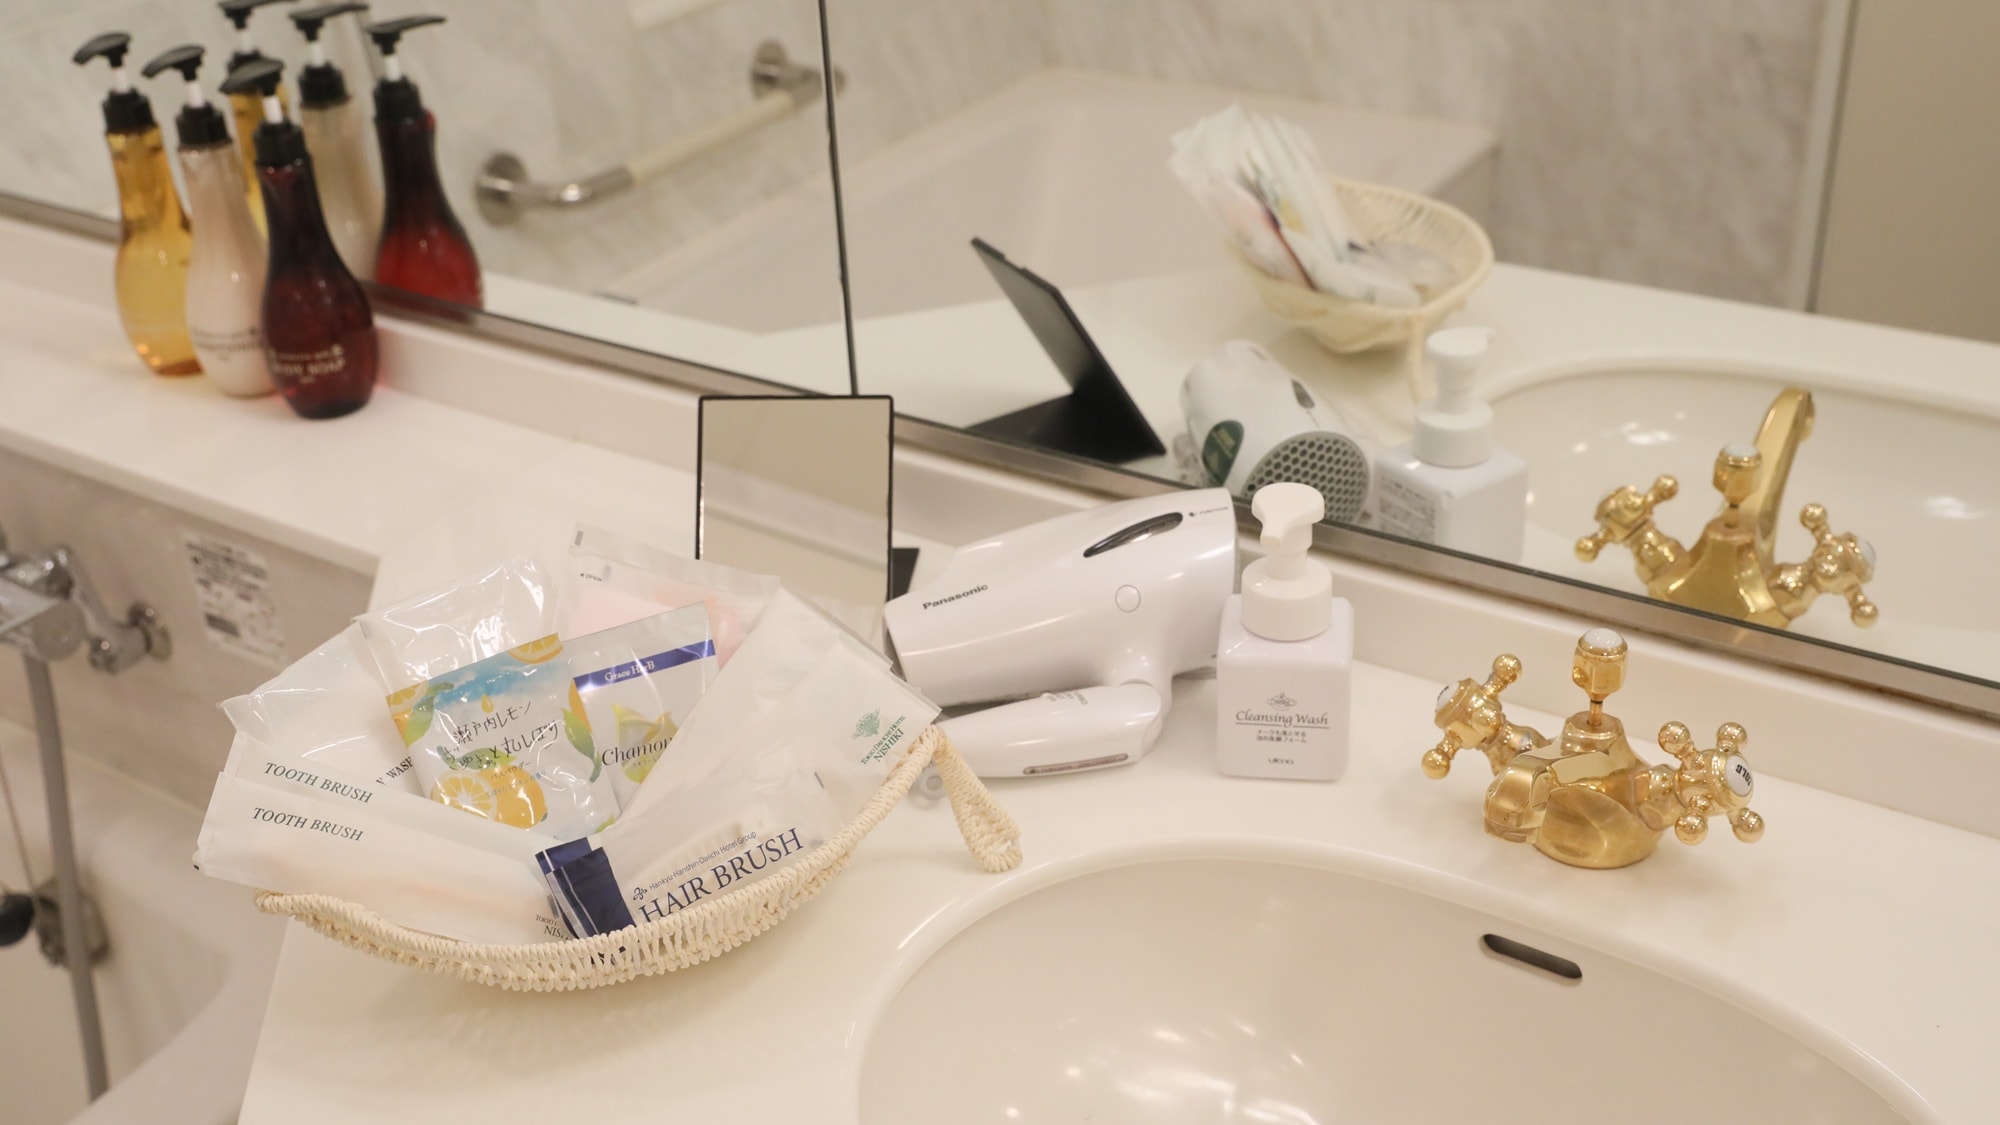 Executive twin bath amenities example